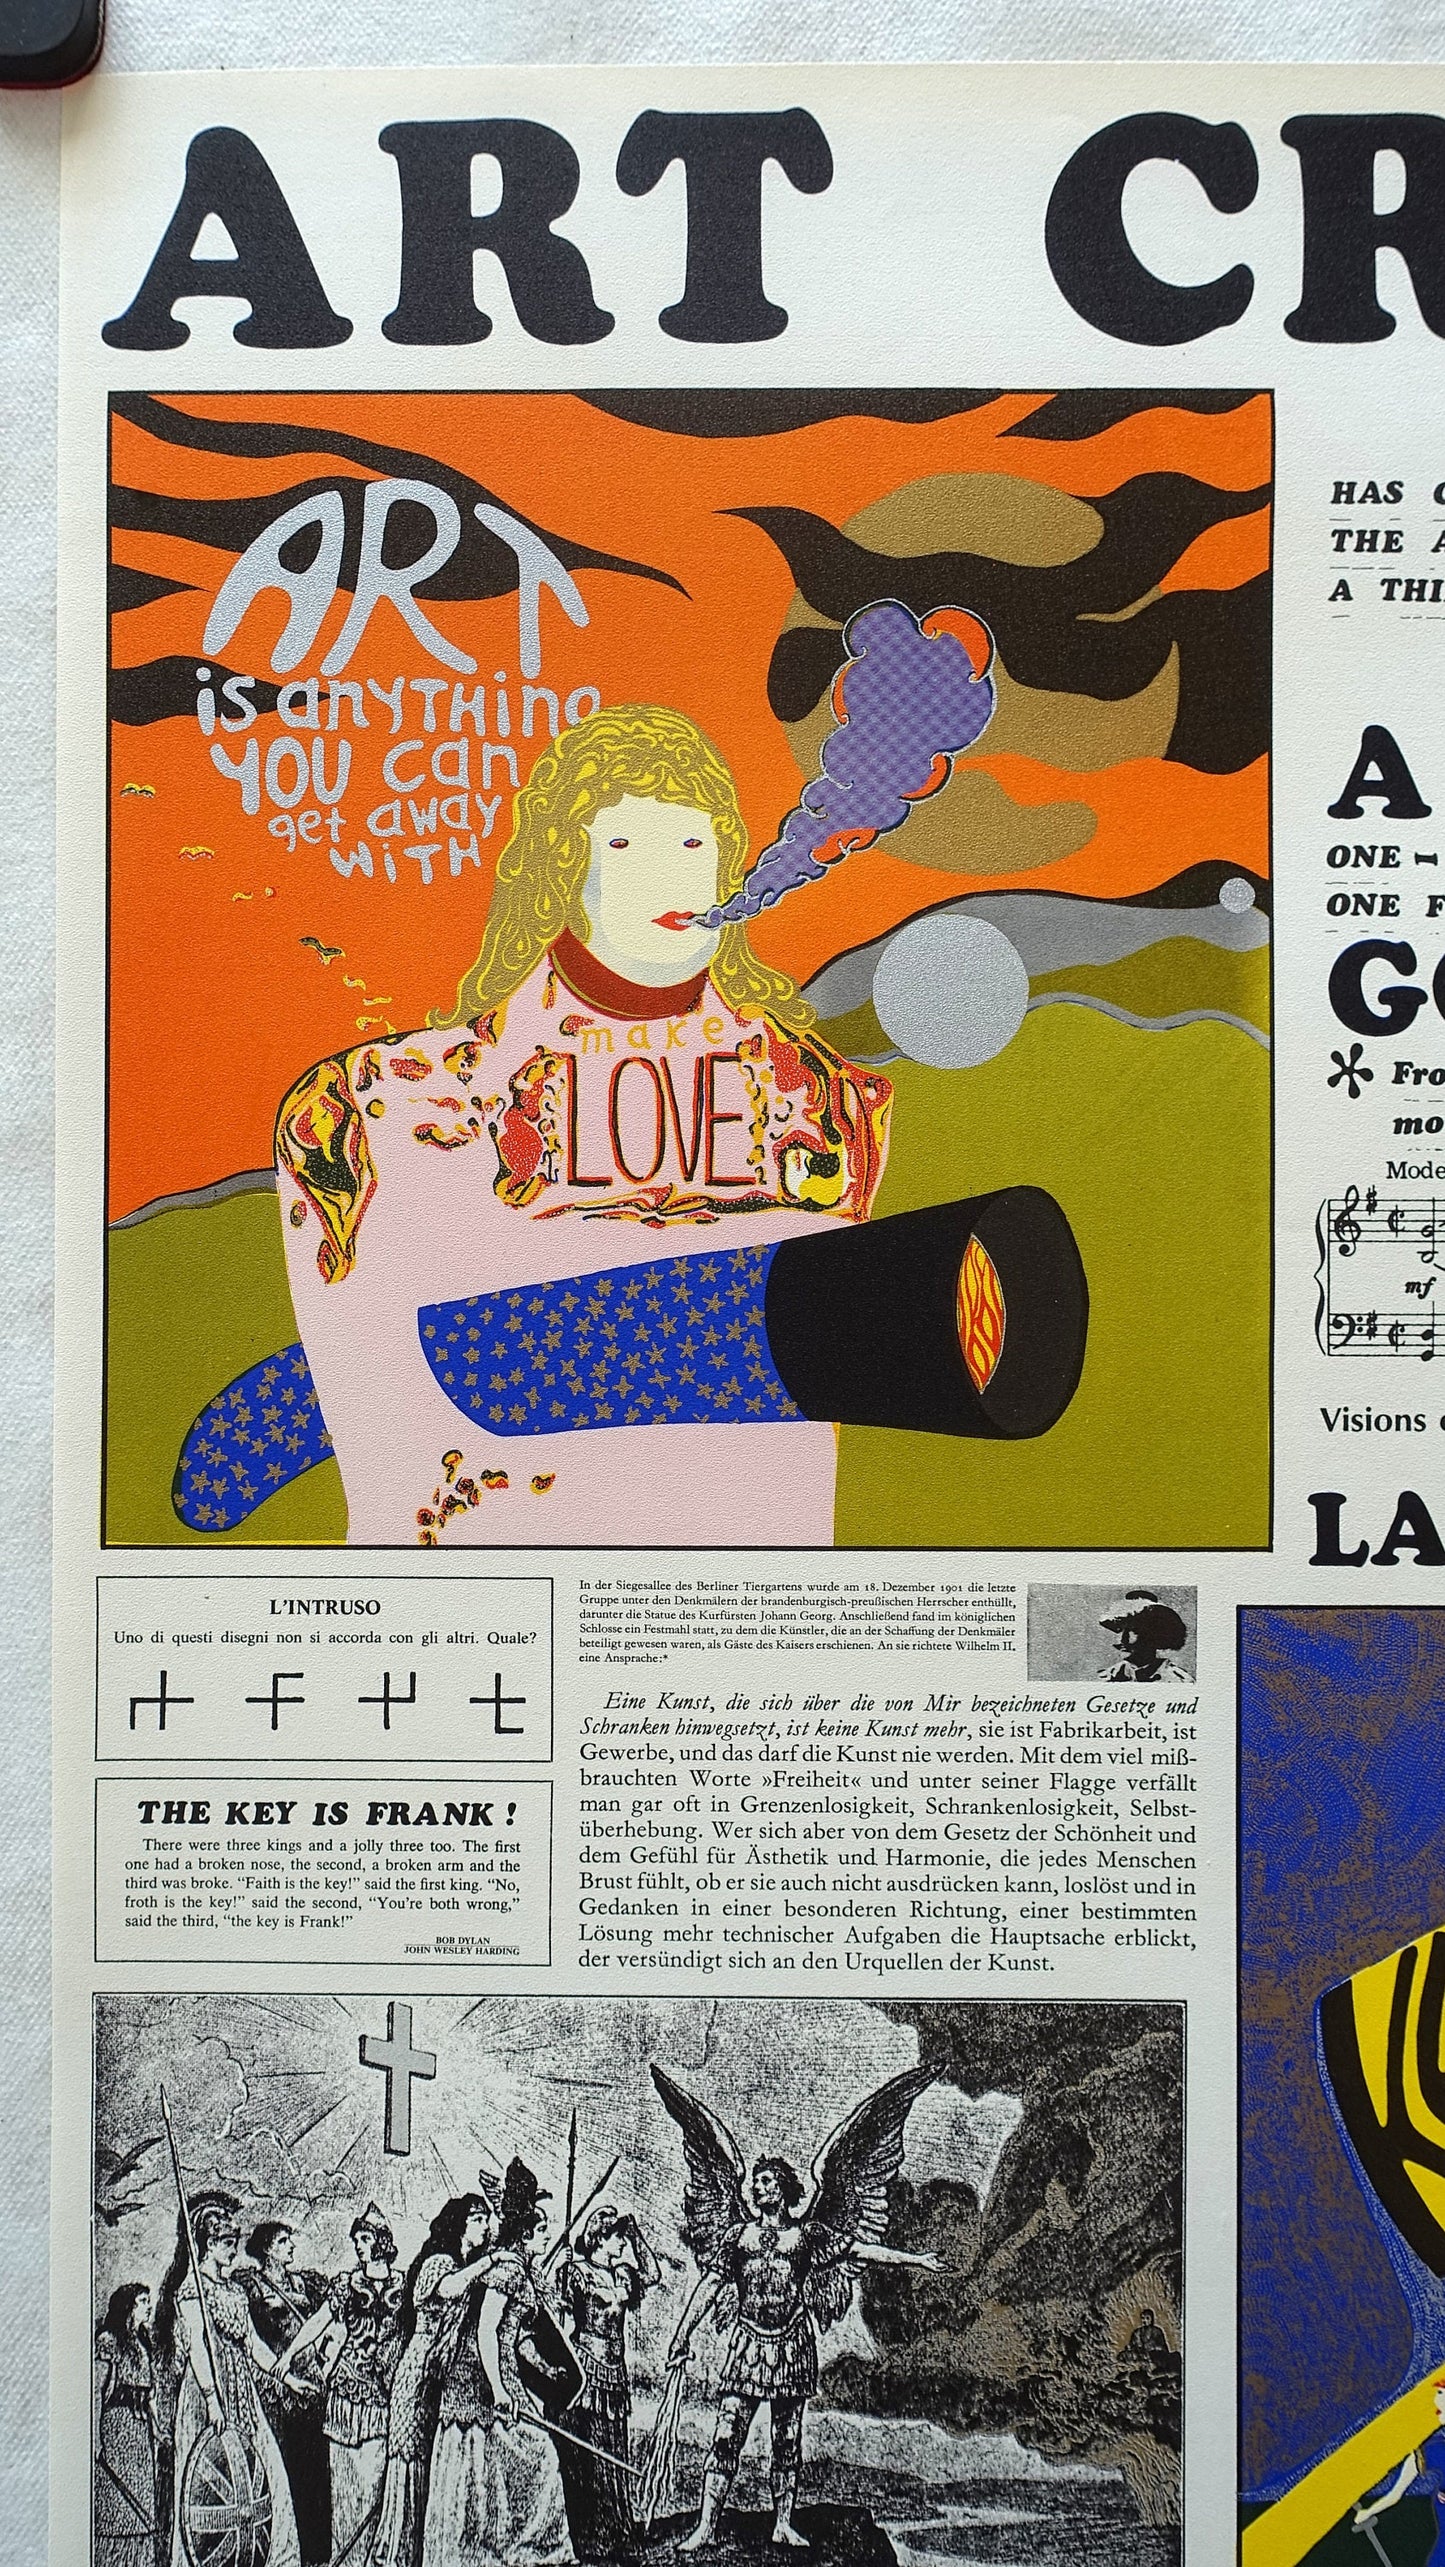 1968 Art Crises! by Sture Johannesson - Original Vintage Poster